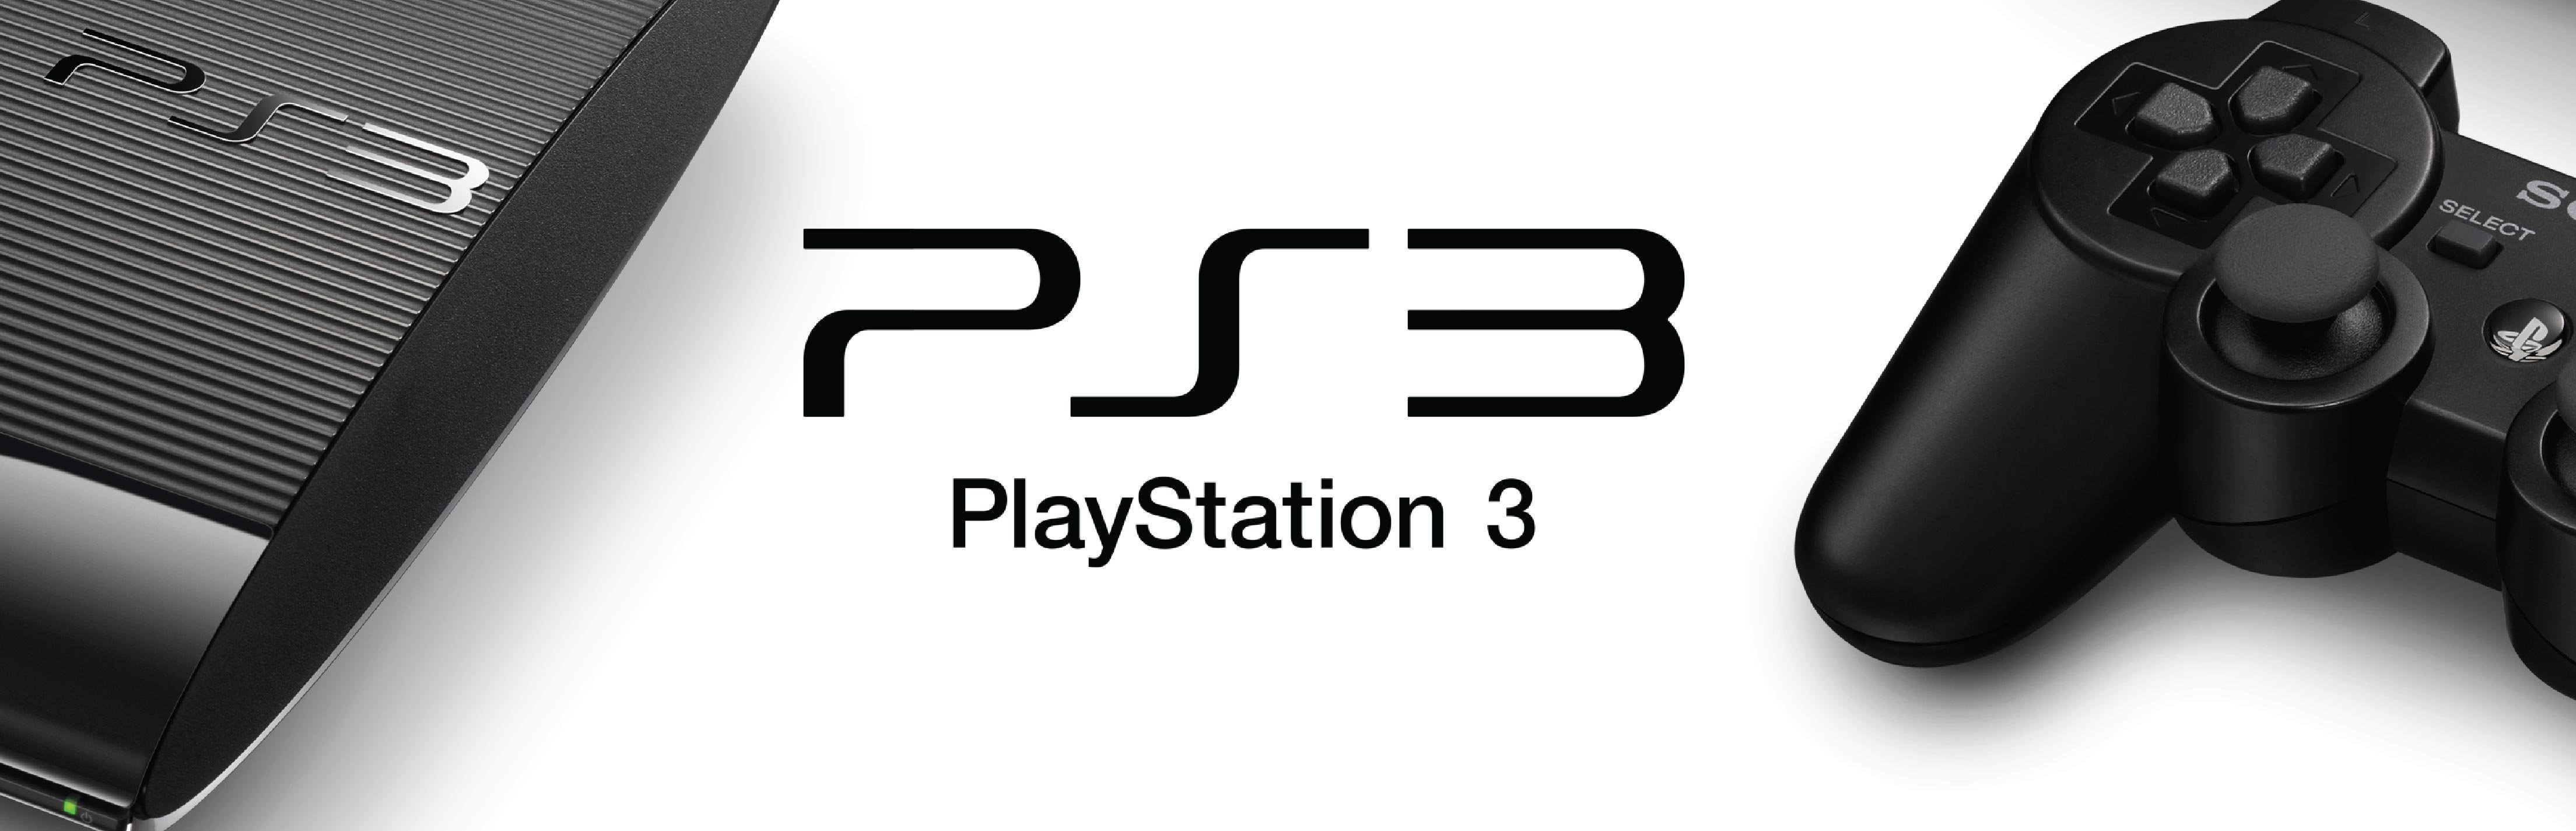 Outlast ps5. PLAYSTATION 5. Sony ps3 logo. Плейстейшен 3 ps3 logo. Консоль Sony PLAYSTATION лого.